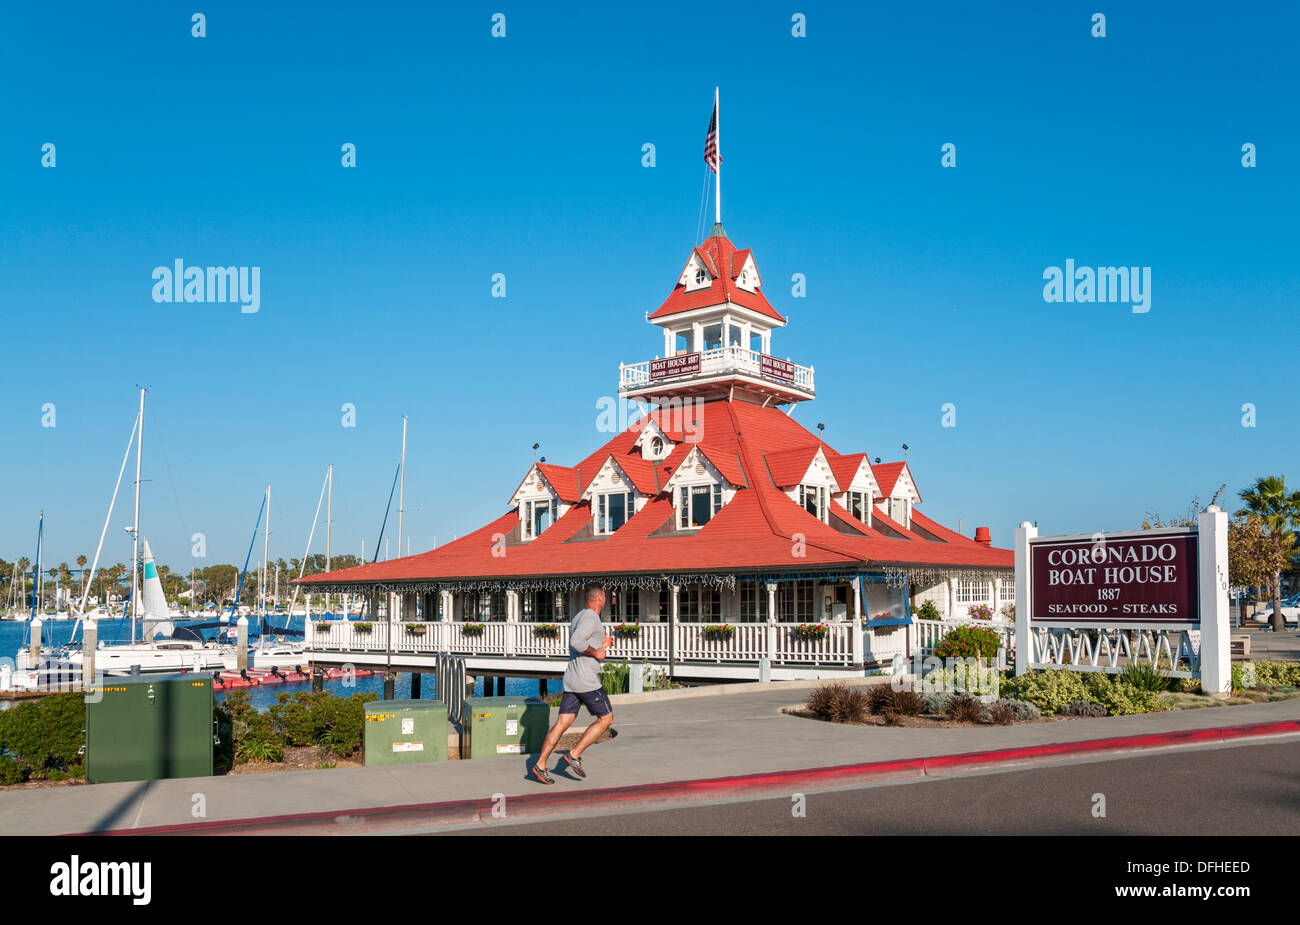 California, Coronado Boathouse Restaurant, named changed to 1887 on the Bay, male runner Stock Photo